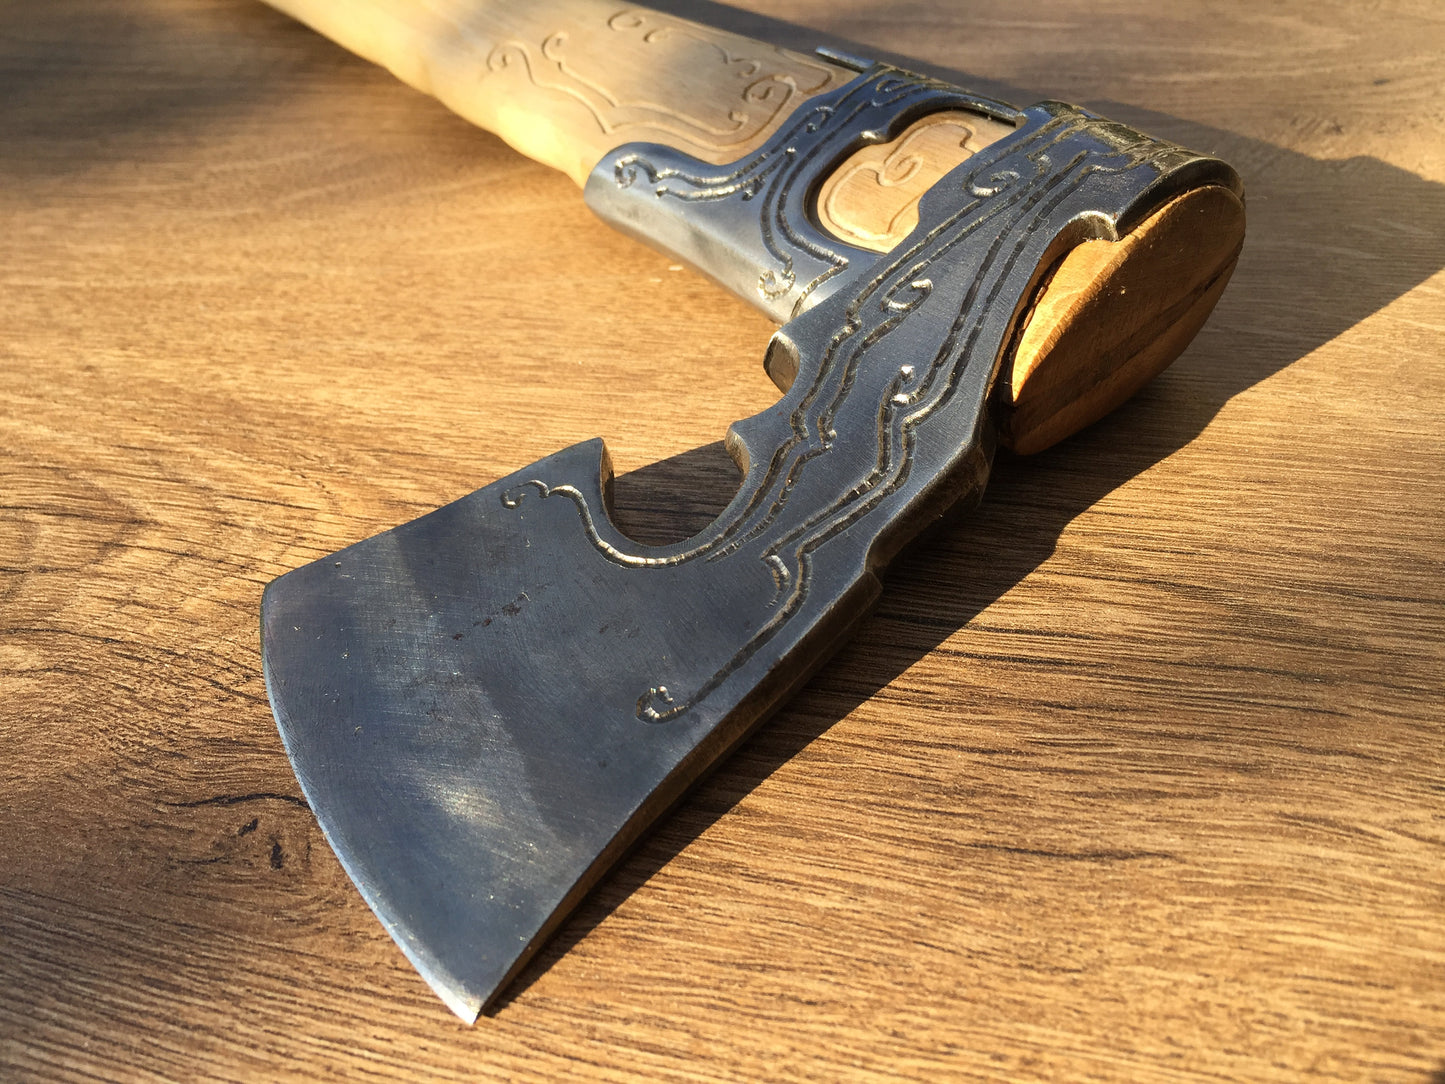 Viking axe, 6th anniversary gift, handyman tools, Leviathan axe, Kratos axe, mens gifts, medieval axe, tomahawk, hatchet, viking gifts, axe